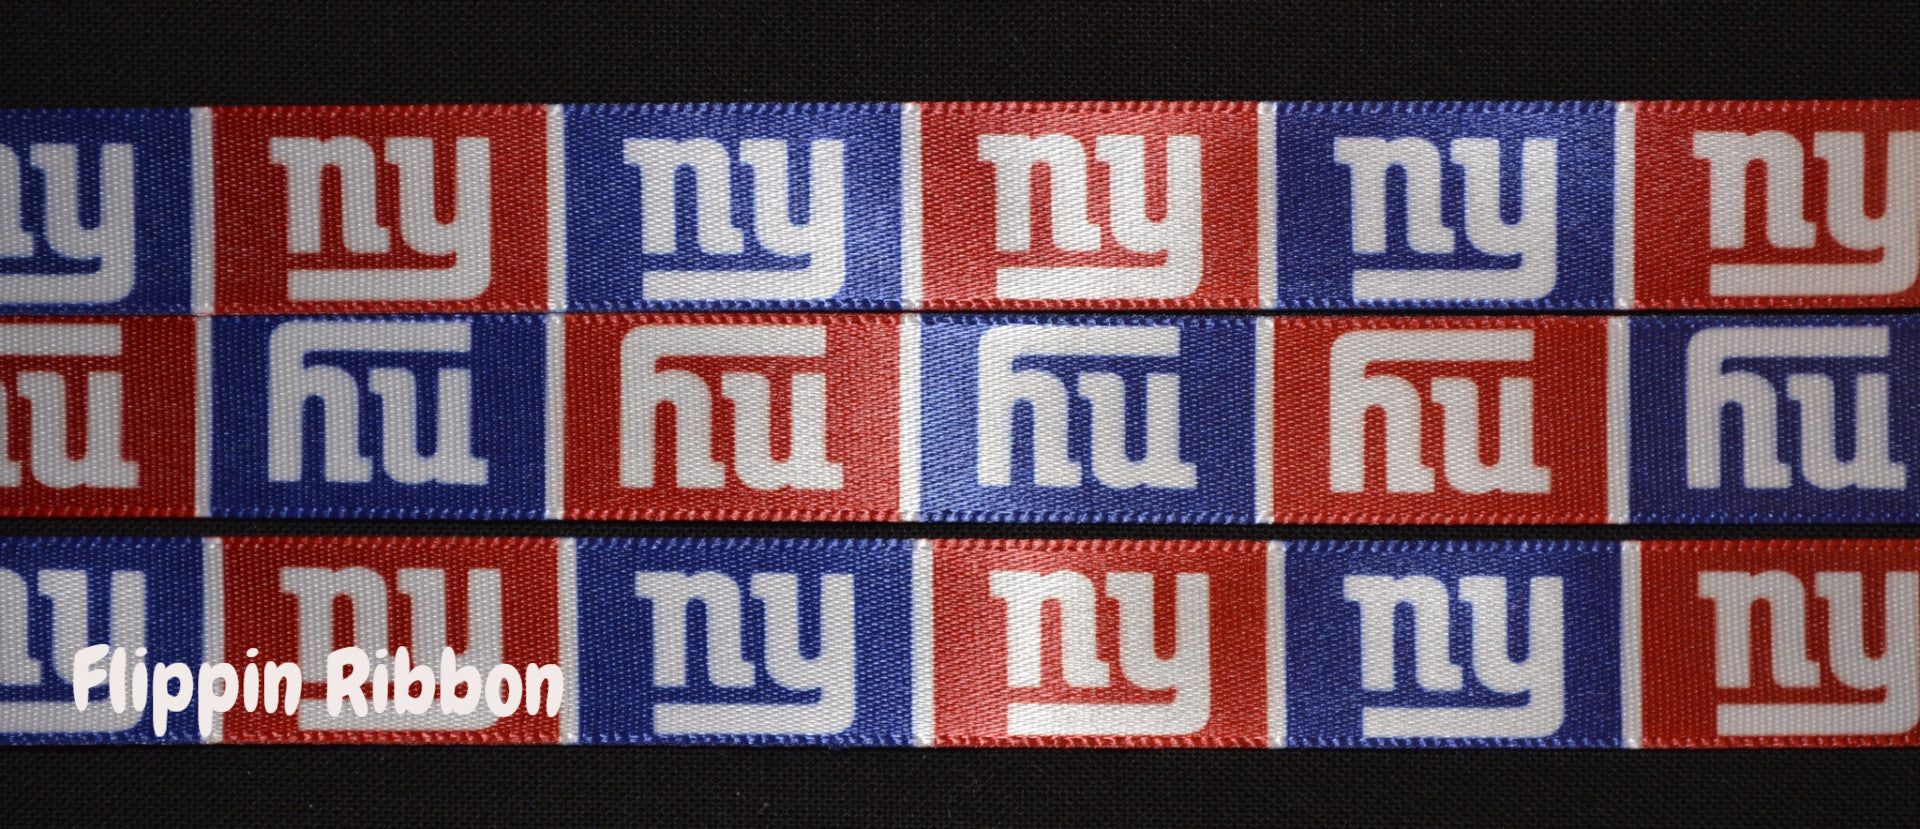 New York Giants ribbon